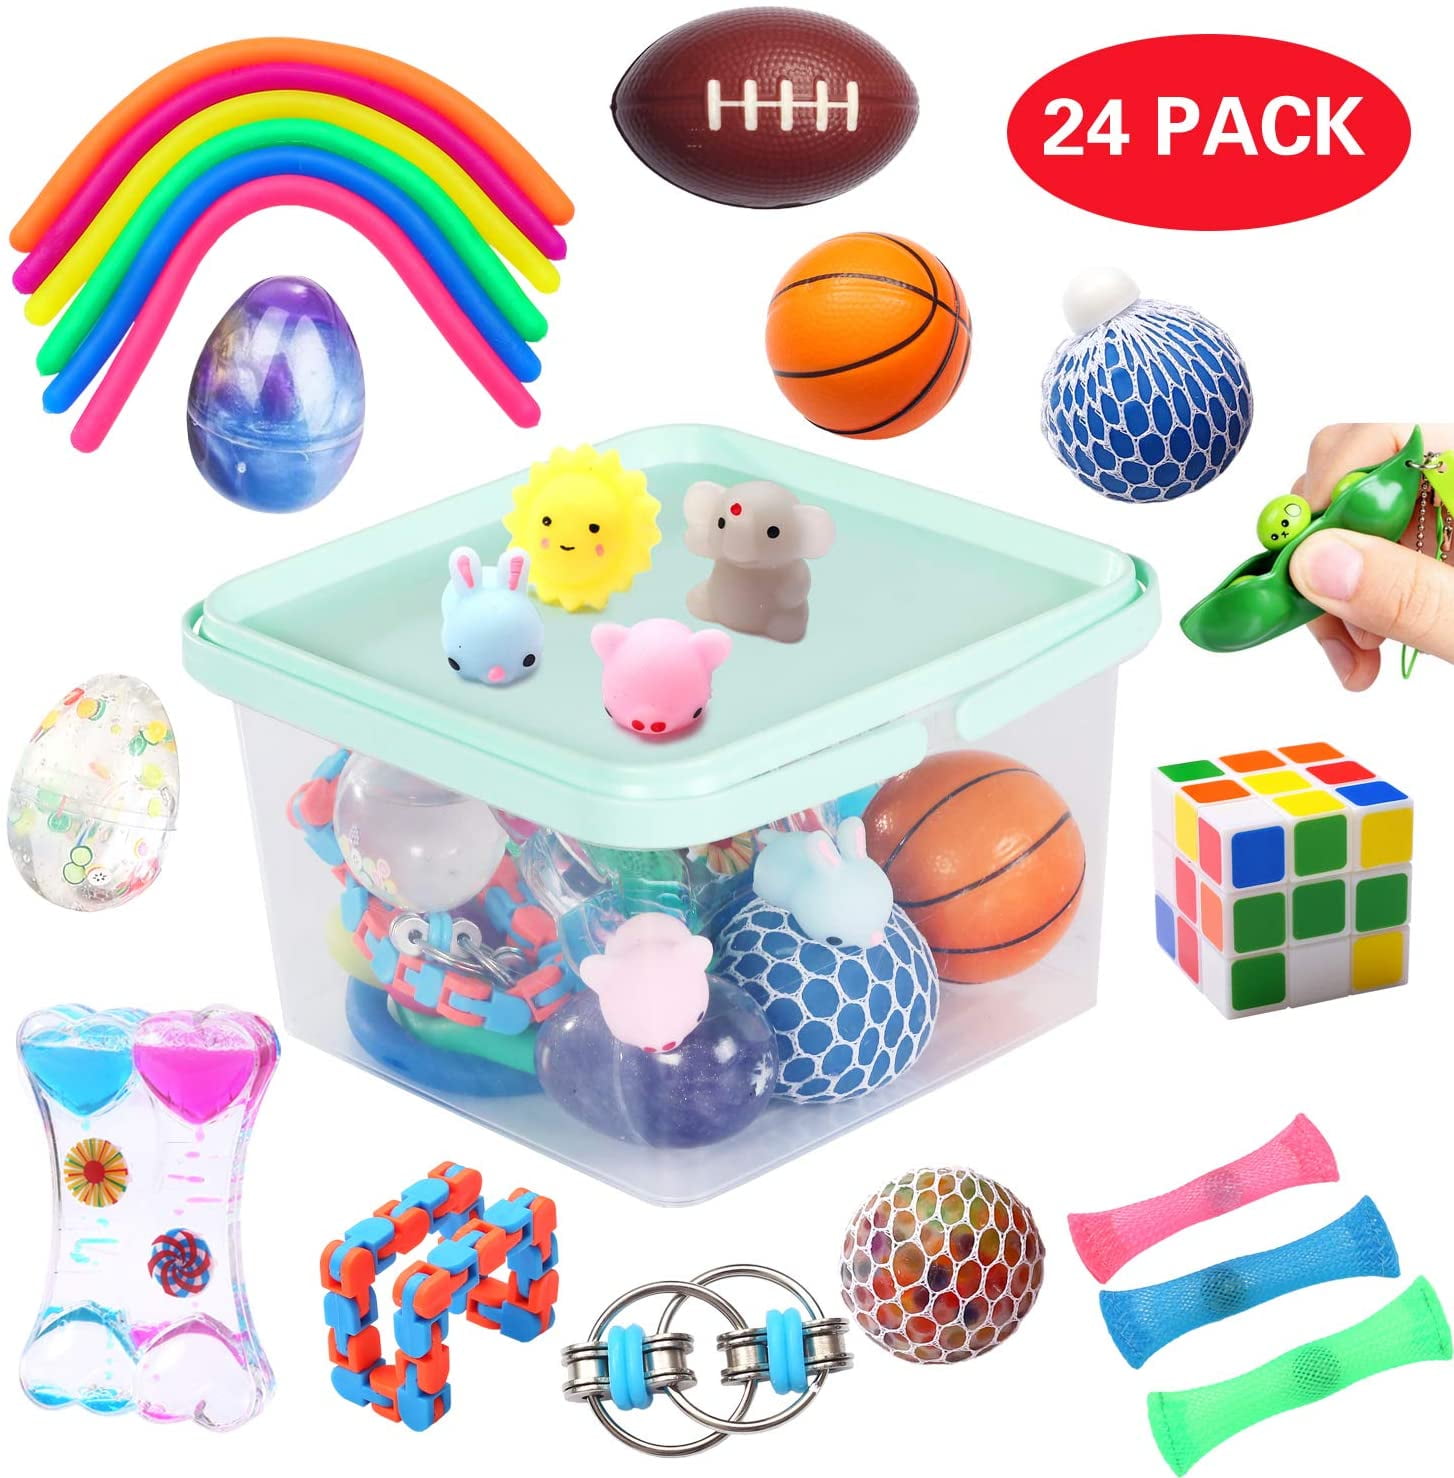 24 Pack Sensory Tools Bundle for Stress Relief Hand Toys for Ki Fidget Toys Set 